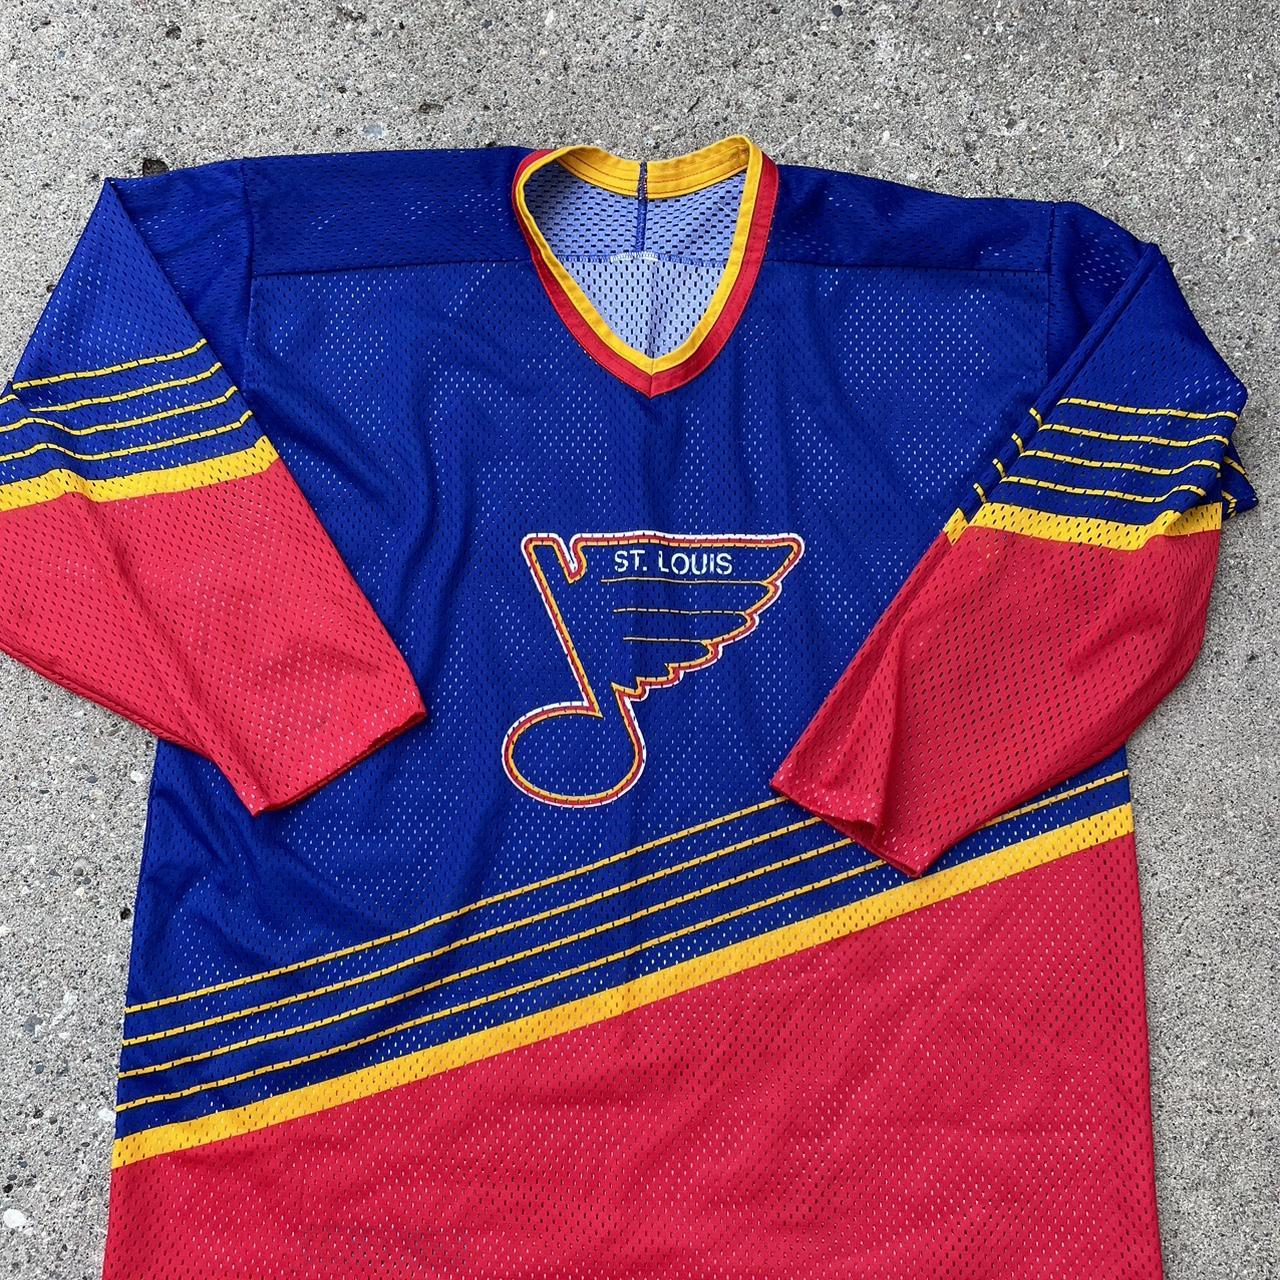 Vintage St. Louis Blues Sweatshirt // 90s Blue - Depop